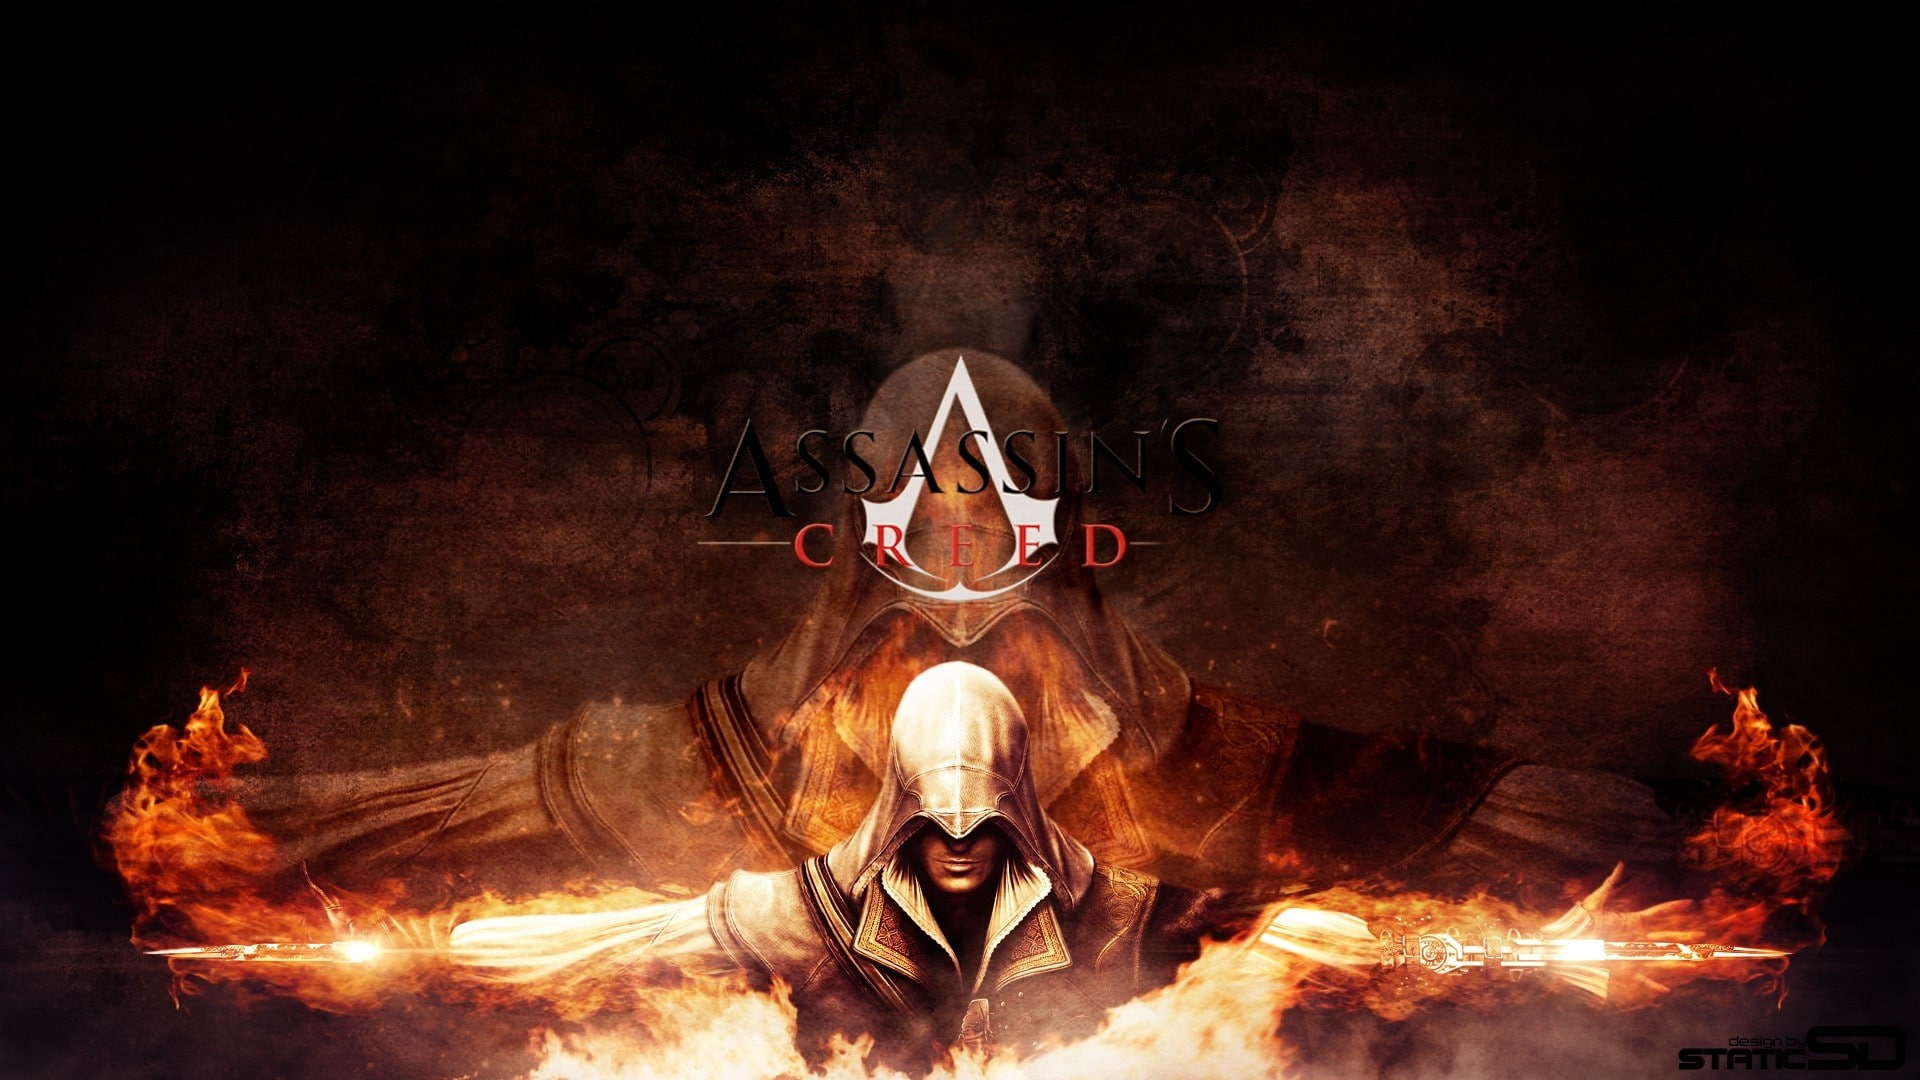 Assassins creed, Desmond miles, Fire, Assassins symbol, Game